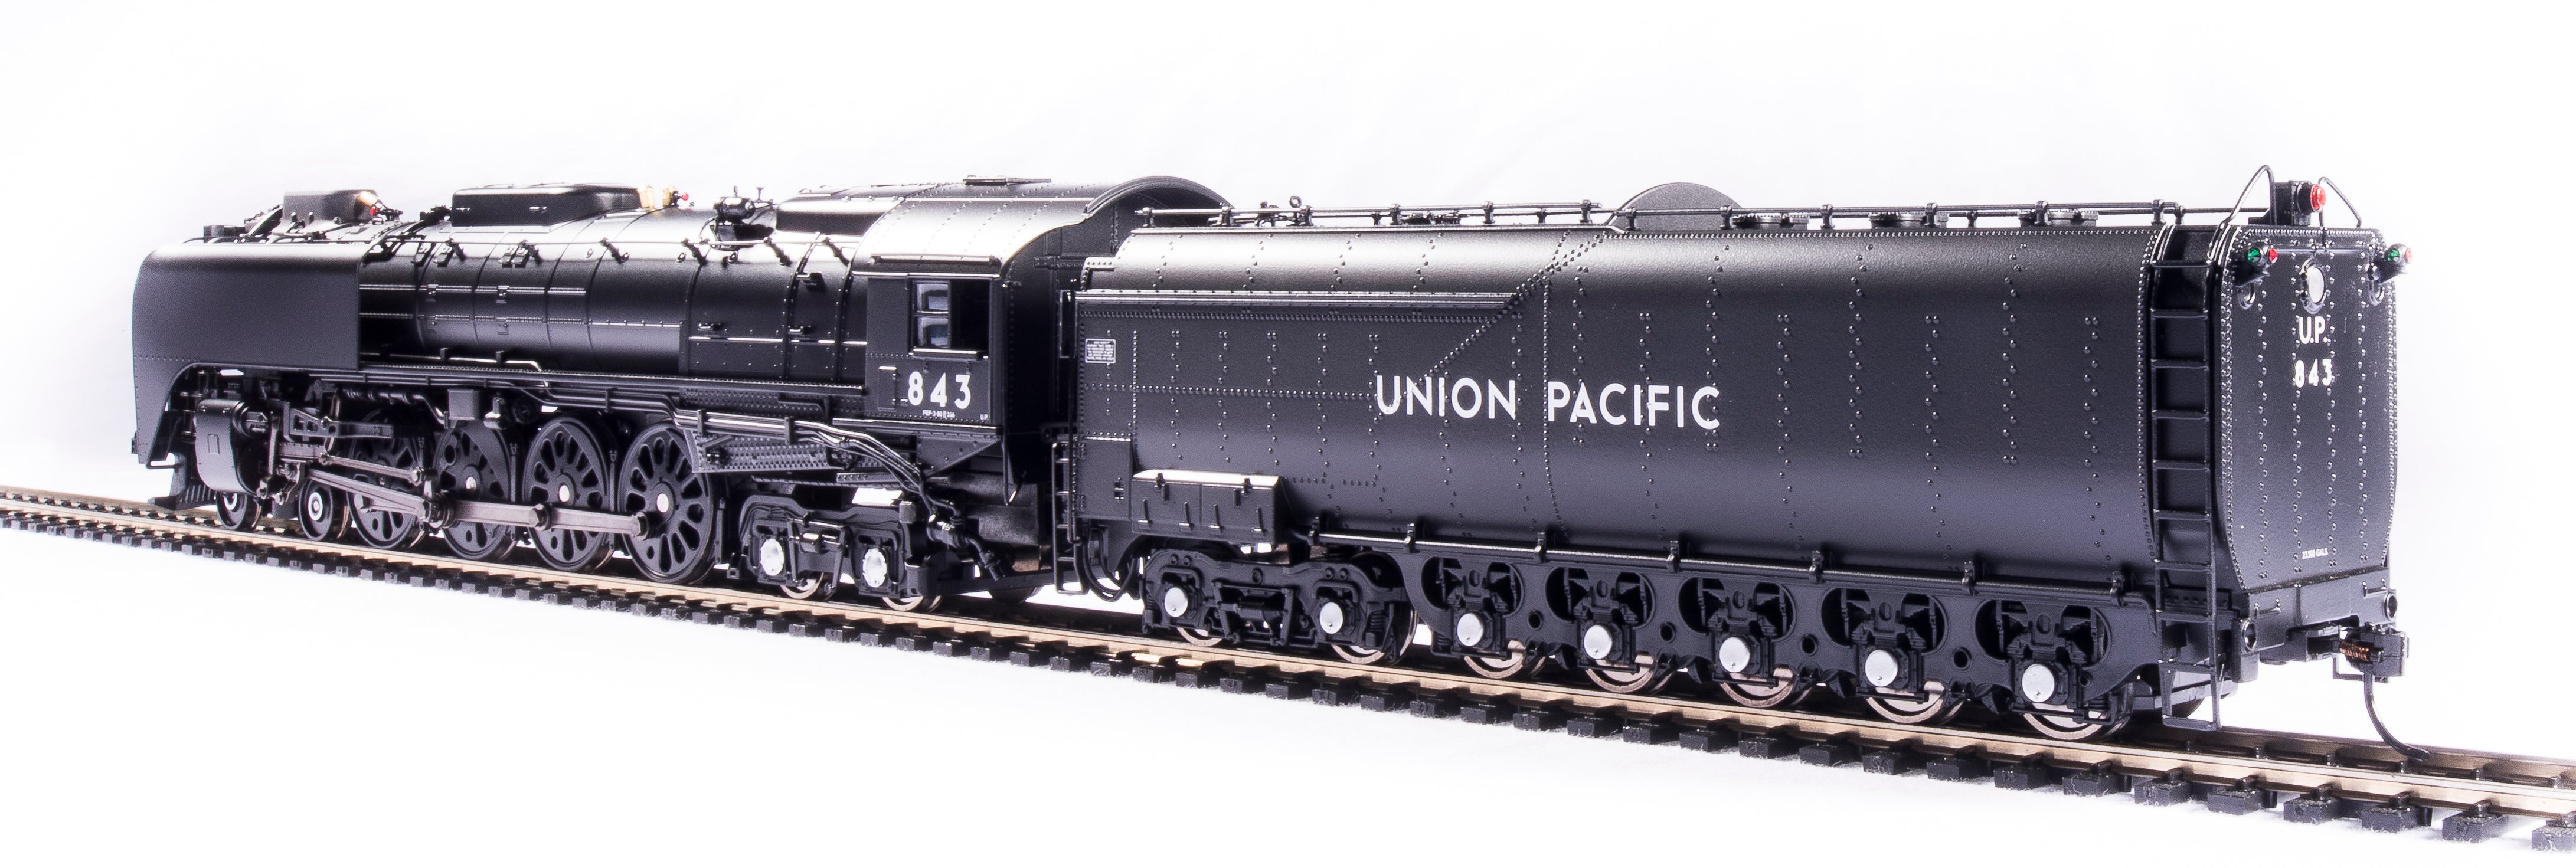 6640 Union Pacific 4-8-4, Class FEF-3, #844, Black & Graphite, Modern Excursion, Paragon4 Sound/DC/DCC, Smoke, HO